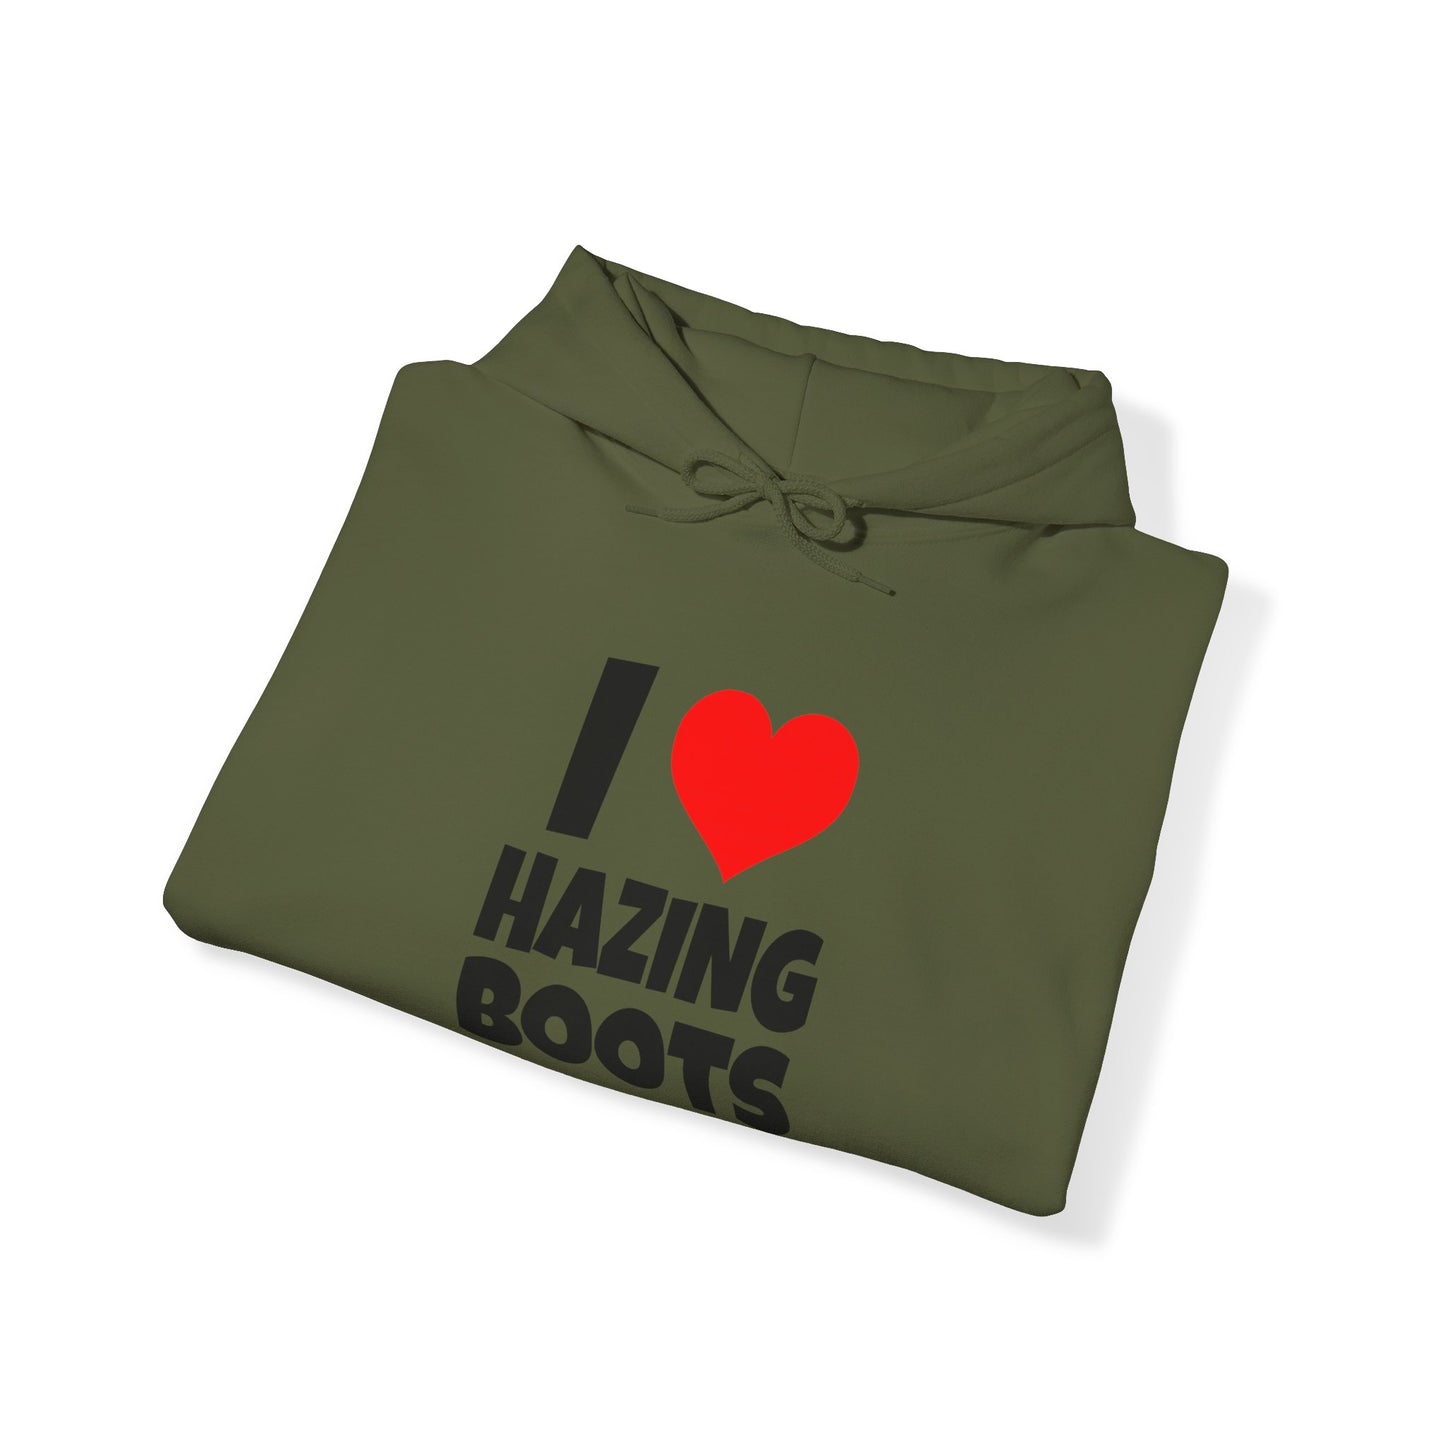 I Love Hazing Boots - Hooded Sweatshirt